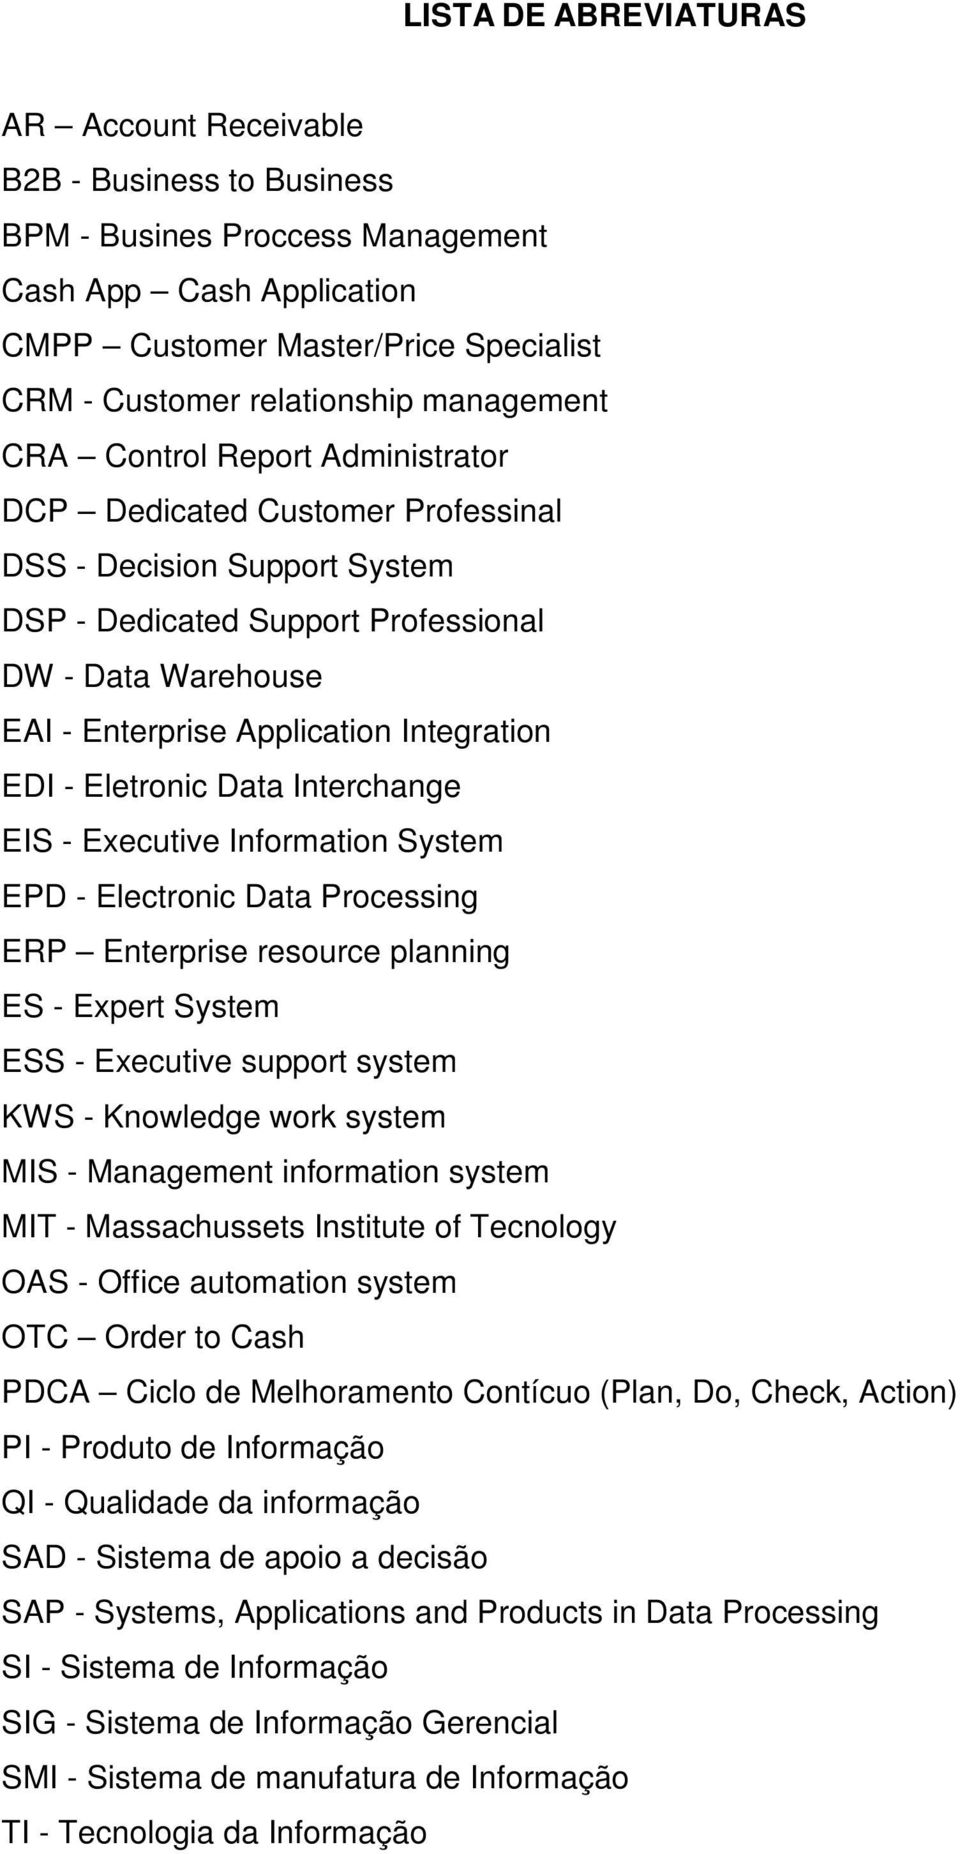 Integration EDI - Eletronic Data Interchange EIS - Executive Information System EPD - Electronic Data Processing ERP Enterprise resource planning ES - Expert System ESS - Executive support system KWS